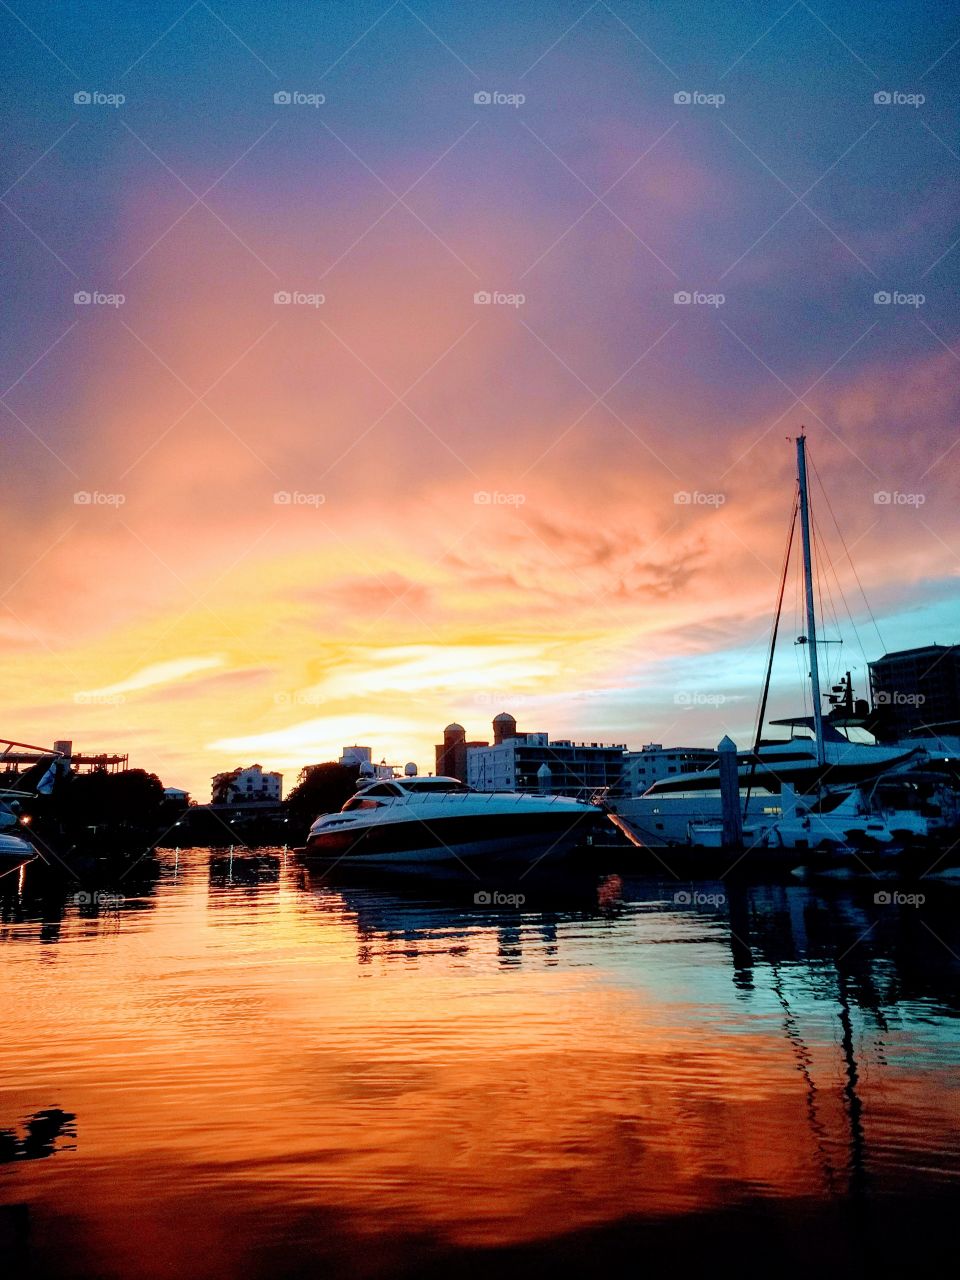 Magnificent Sunset, Beautiful Boats